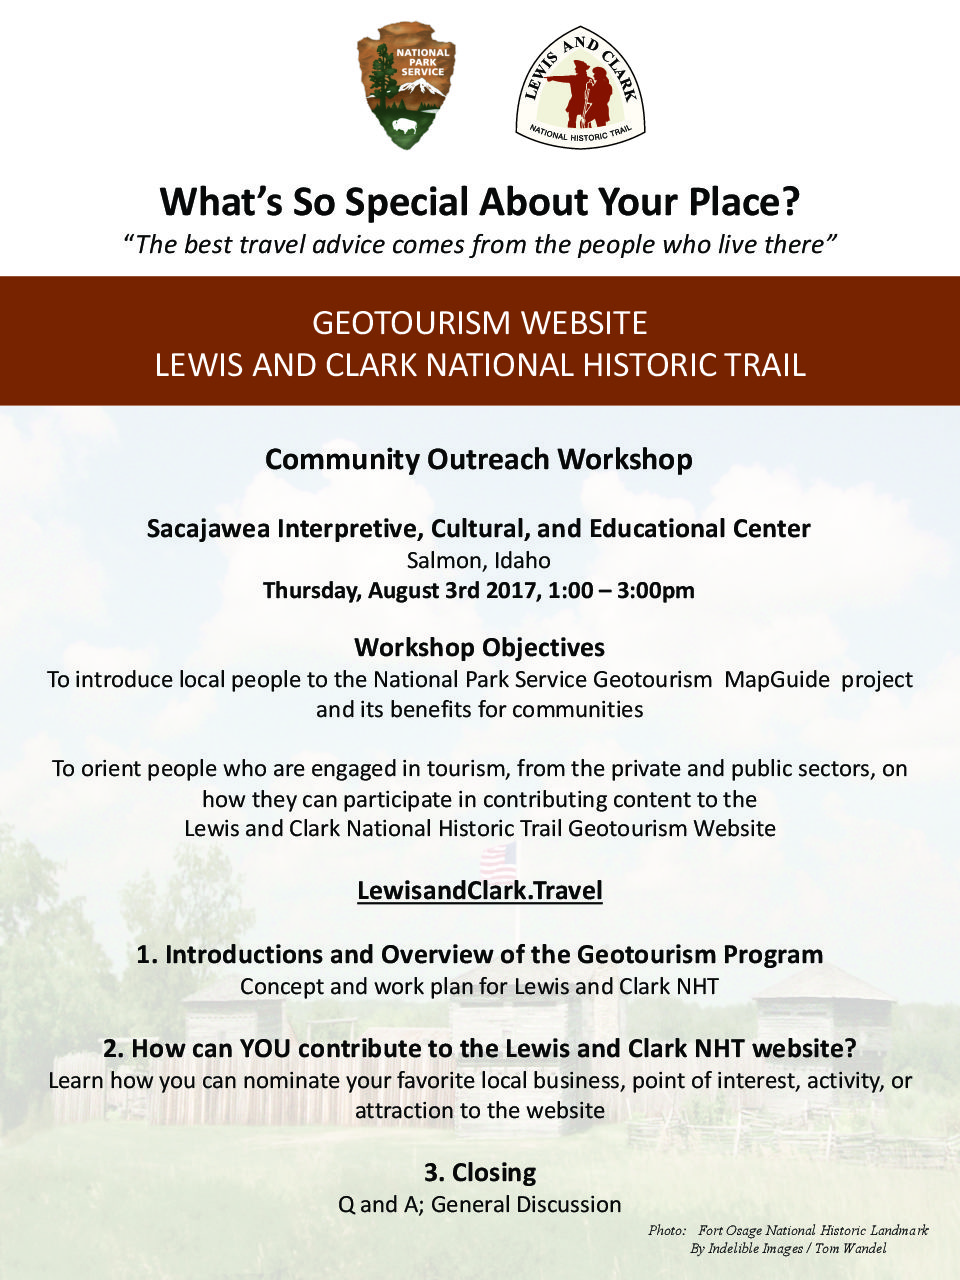 Lewis & Clark National Historic Trail Geotourism Workshop